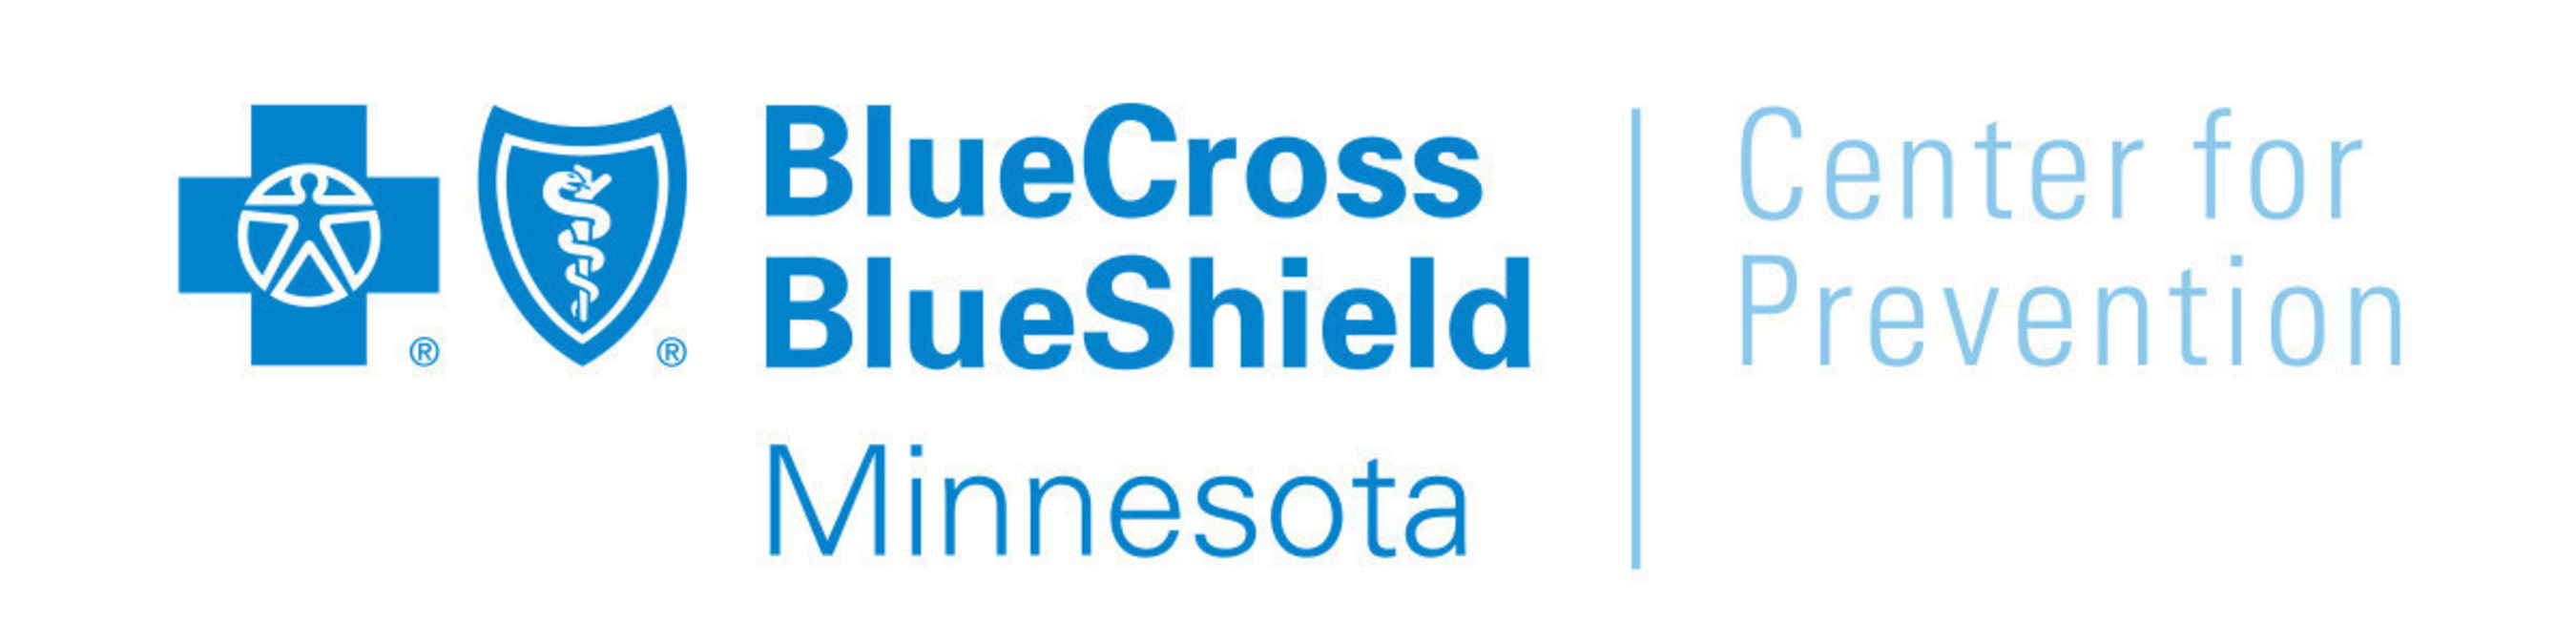 Blue Cross and Blue Shield of Minnesota, Center for Prevention